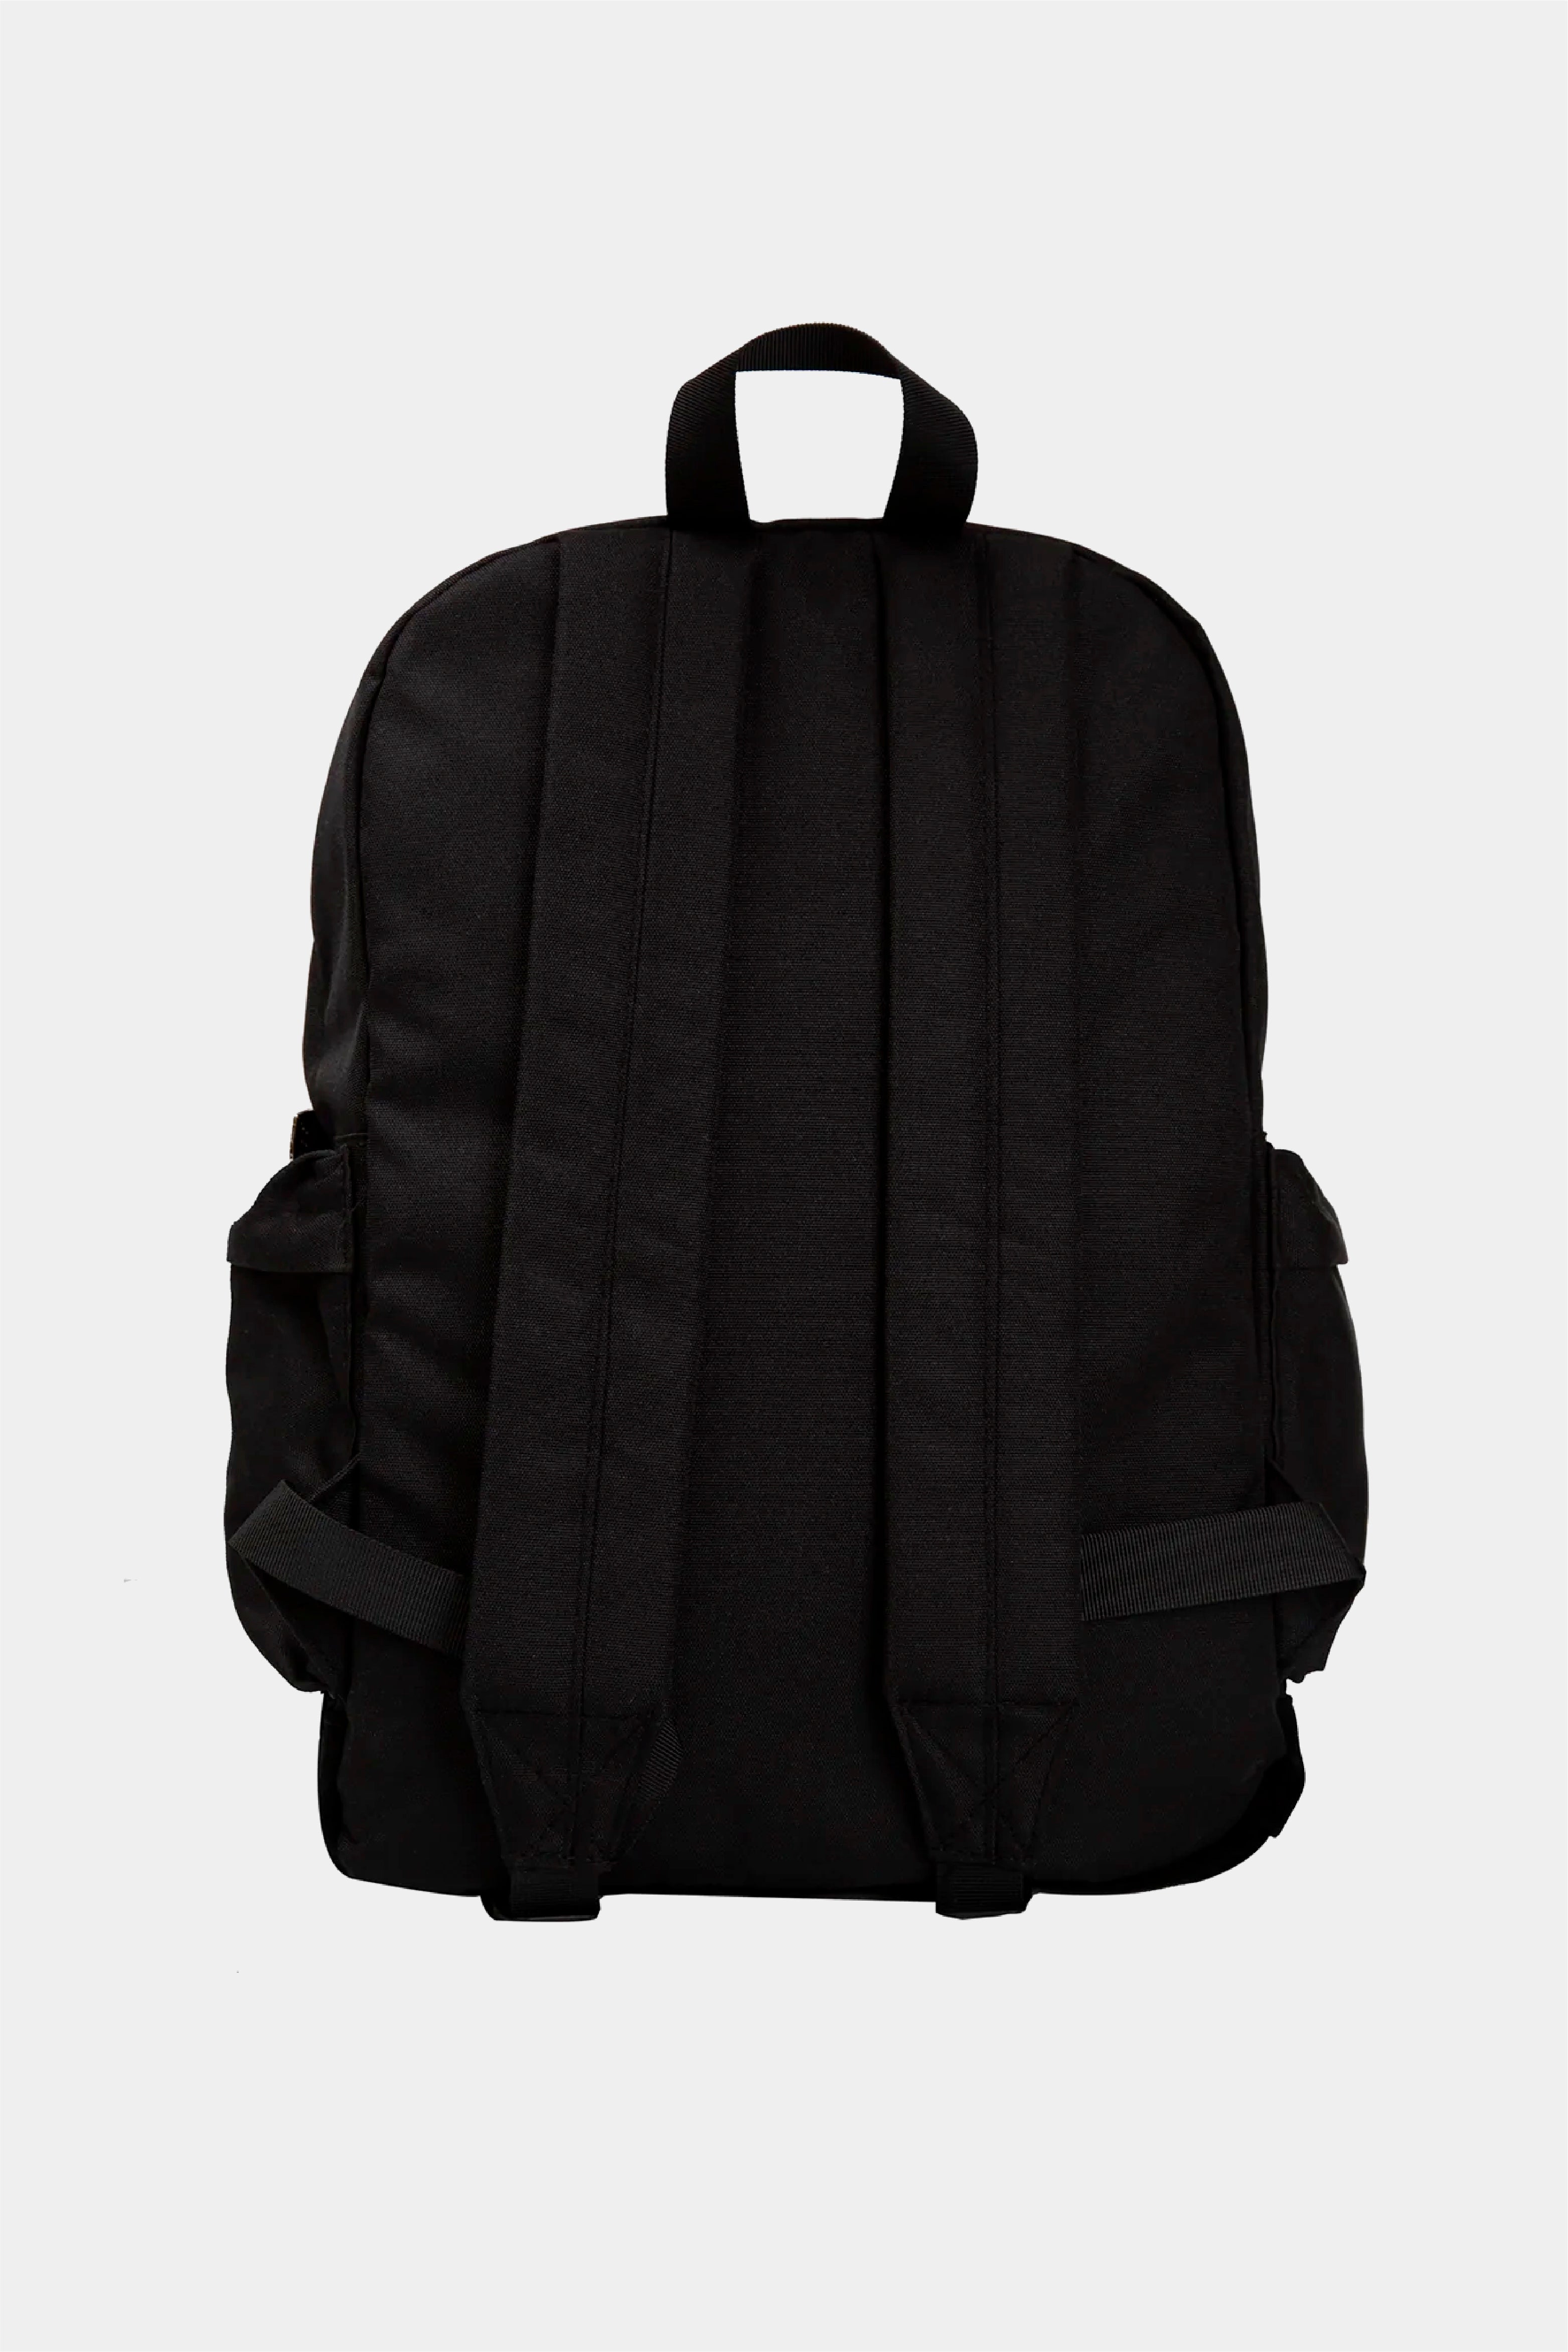 Selectshop FRAME - WKND Online School Bag All-Accessories Concept Store Dubai